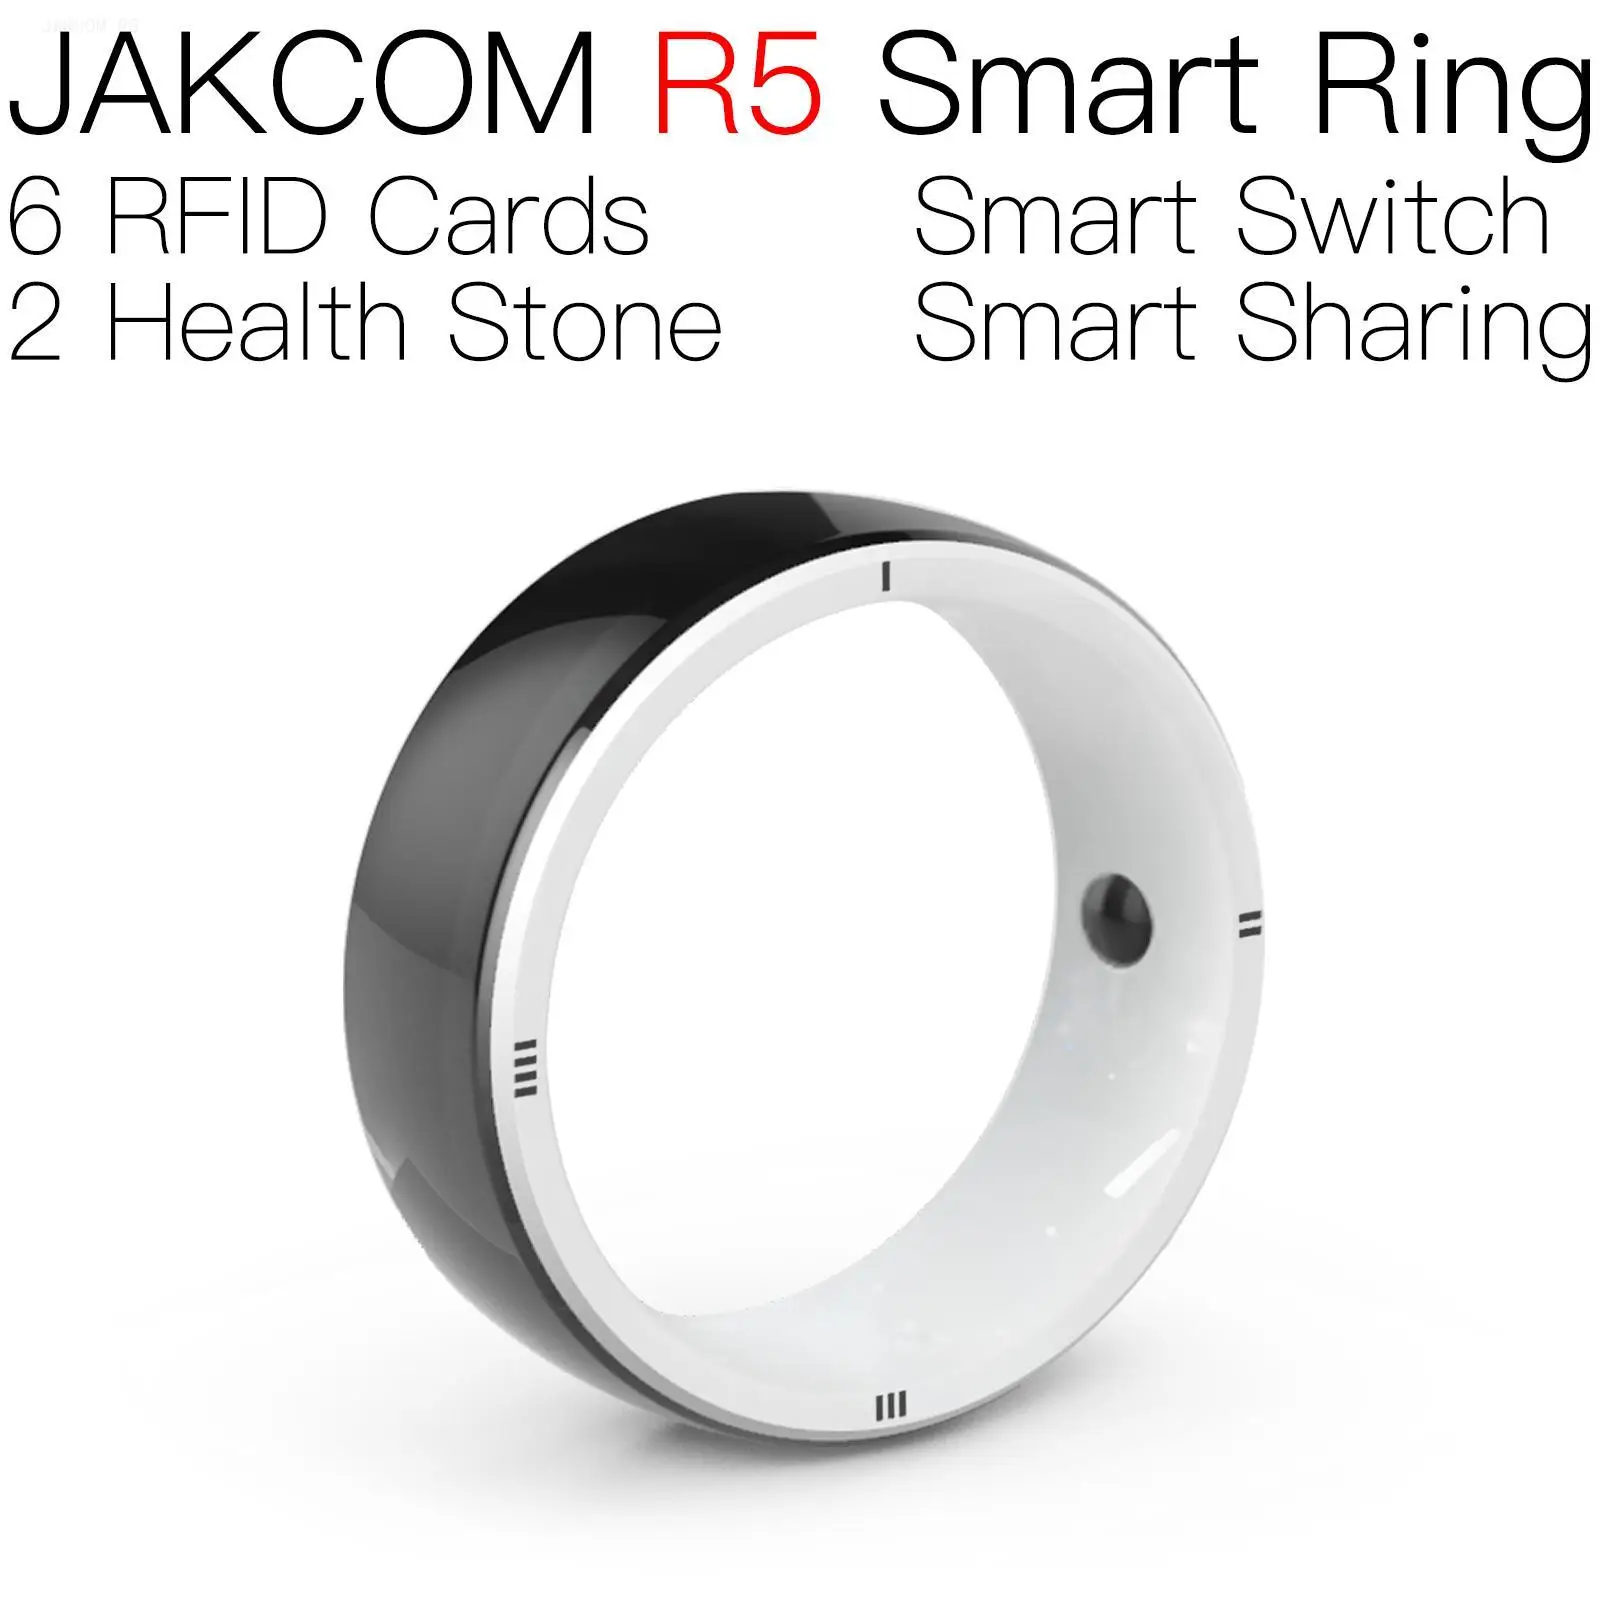 

JAKCOM R5 Smart Ring better than ring chip ev3 nfc sticker micro metal uid changeable key vending machine dual rfid tag hbo max